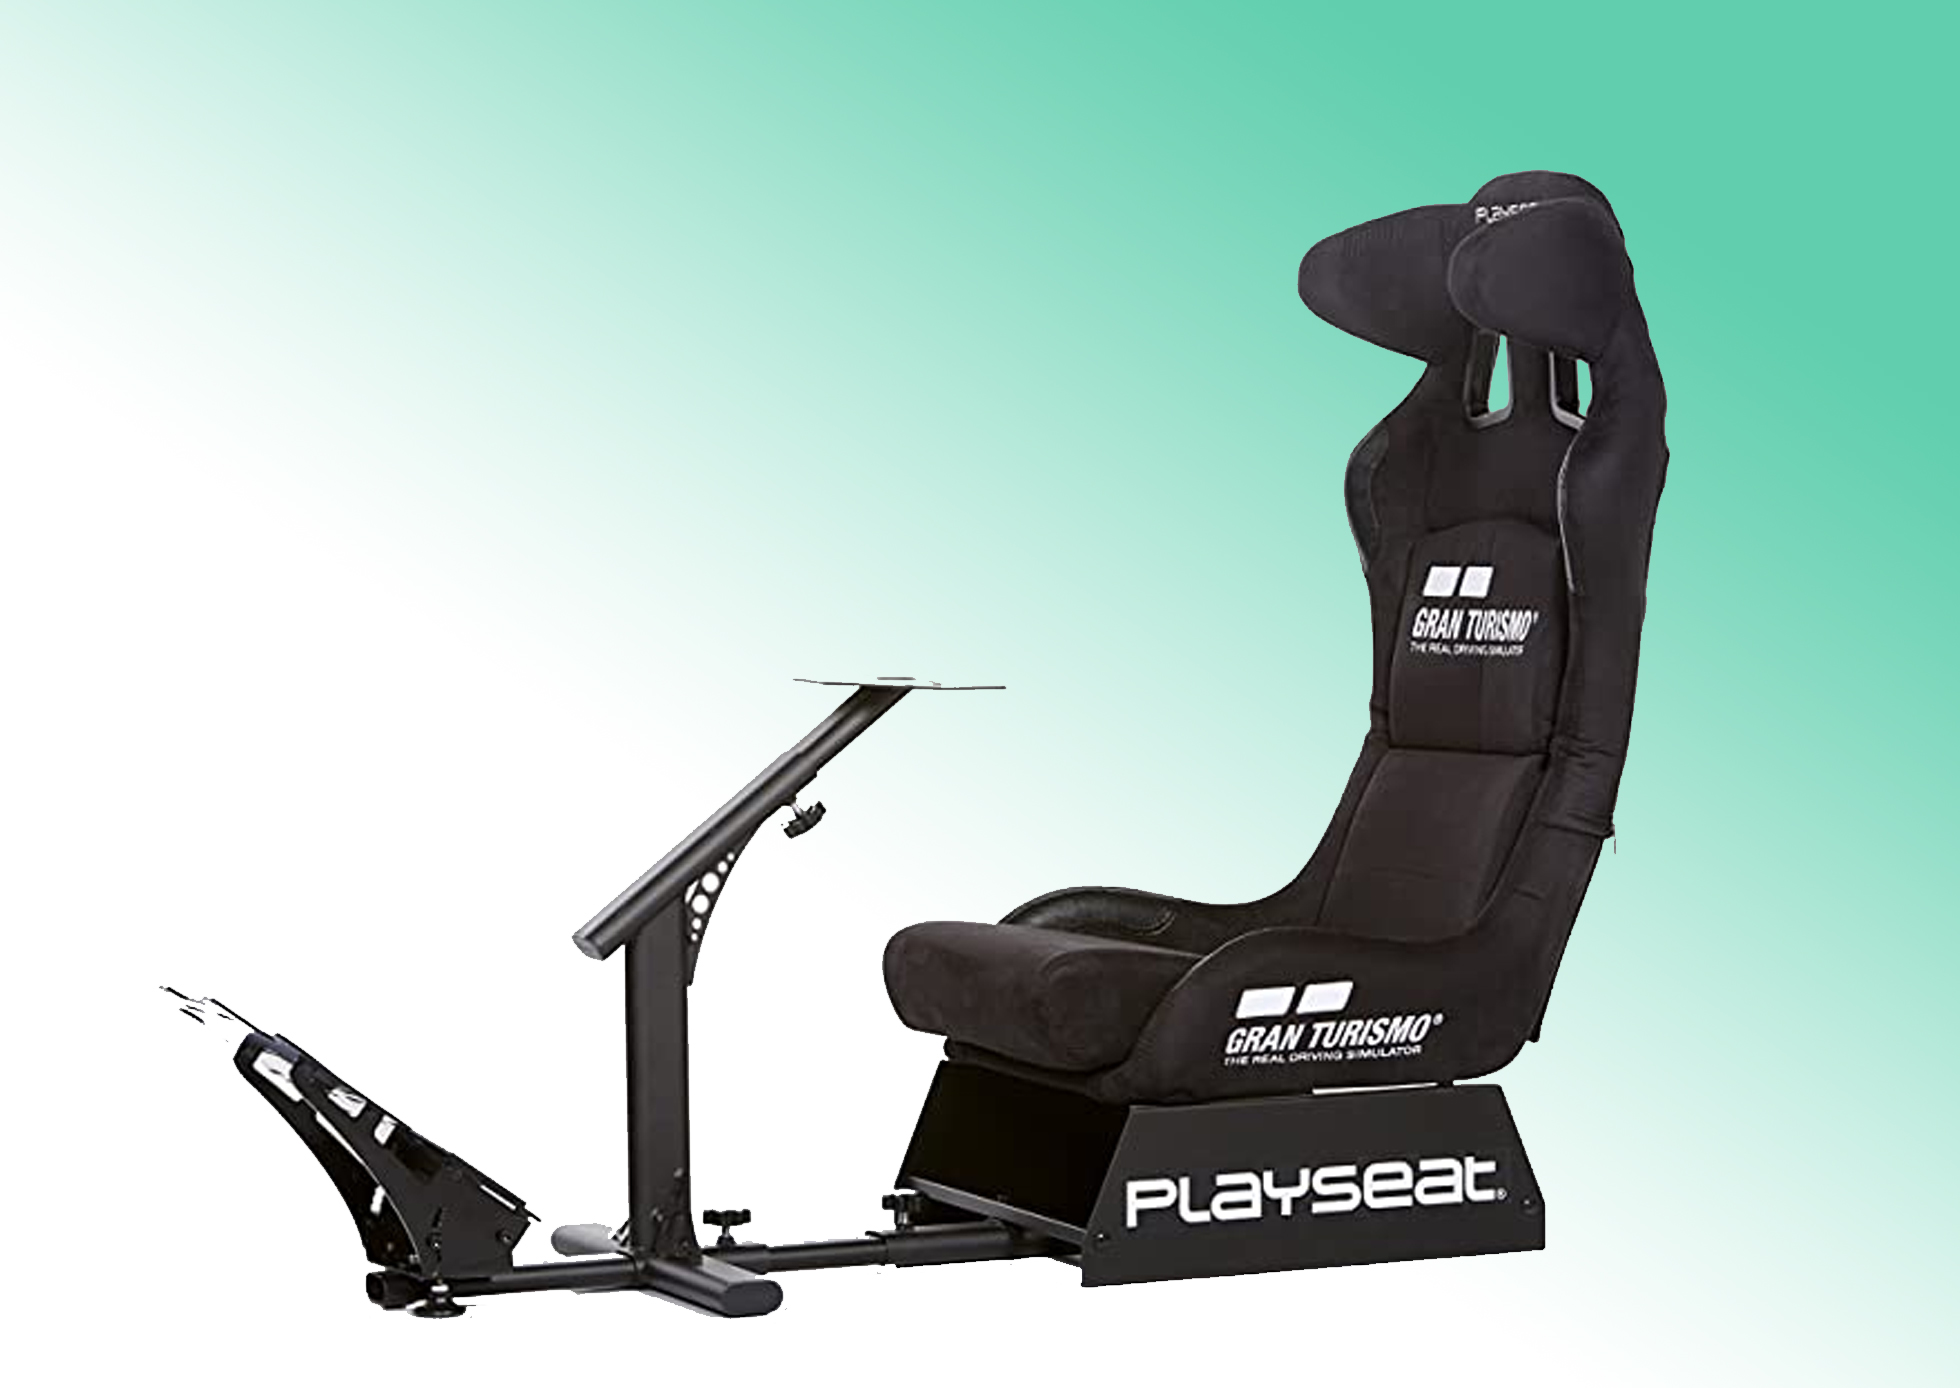 Teste e análise do cockpit do Gran Turismo da Playseat